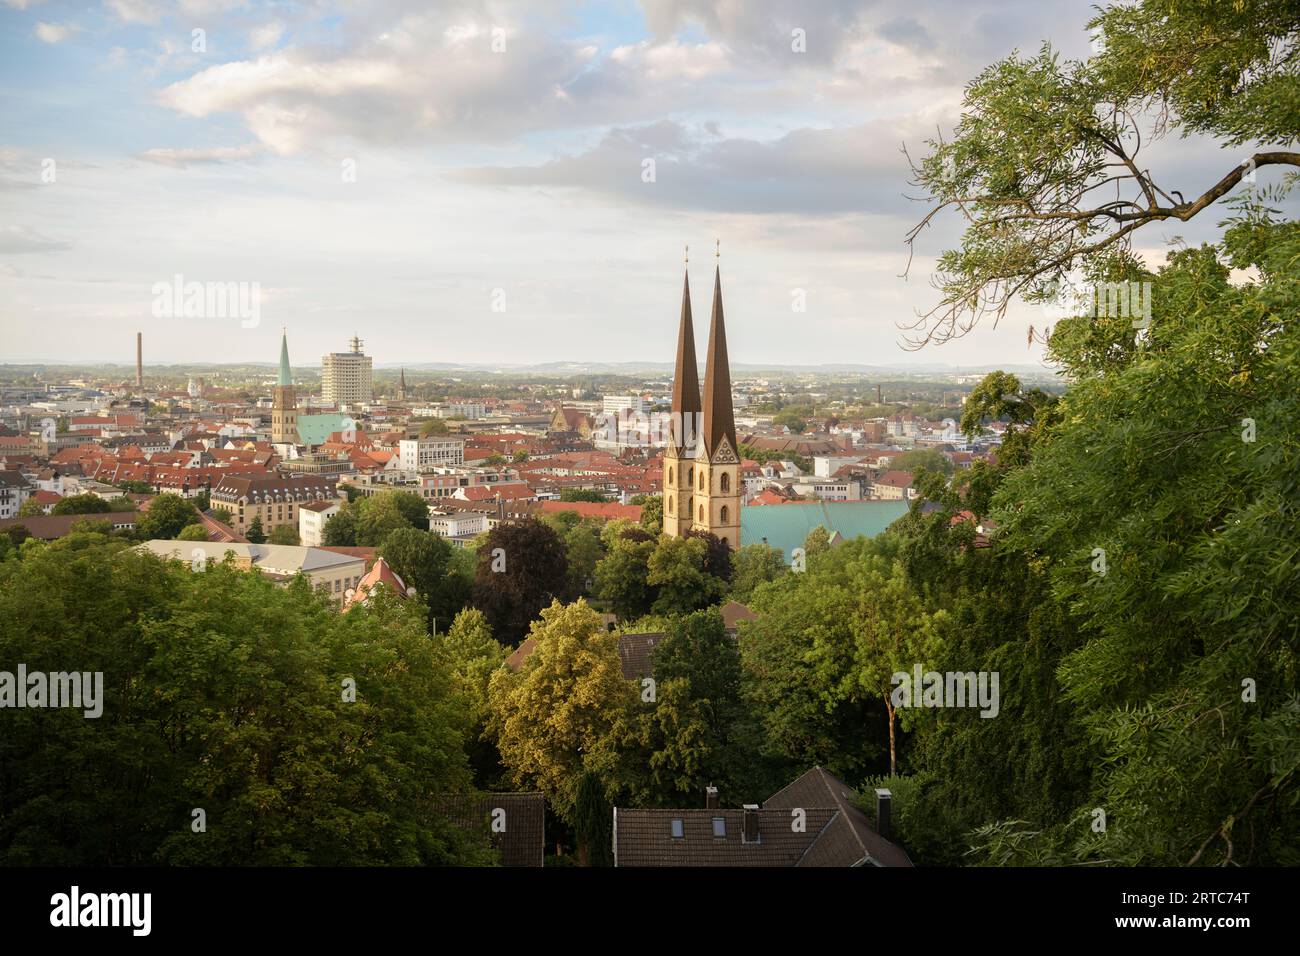 View from Sparrenburg on Bielefeld old town, Bielefeld, North Rhine-Westphalia, Germany, Europe Stock Photo